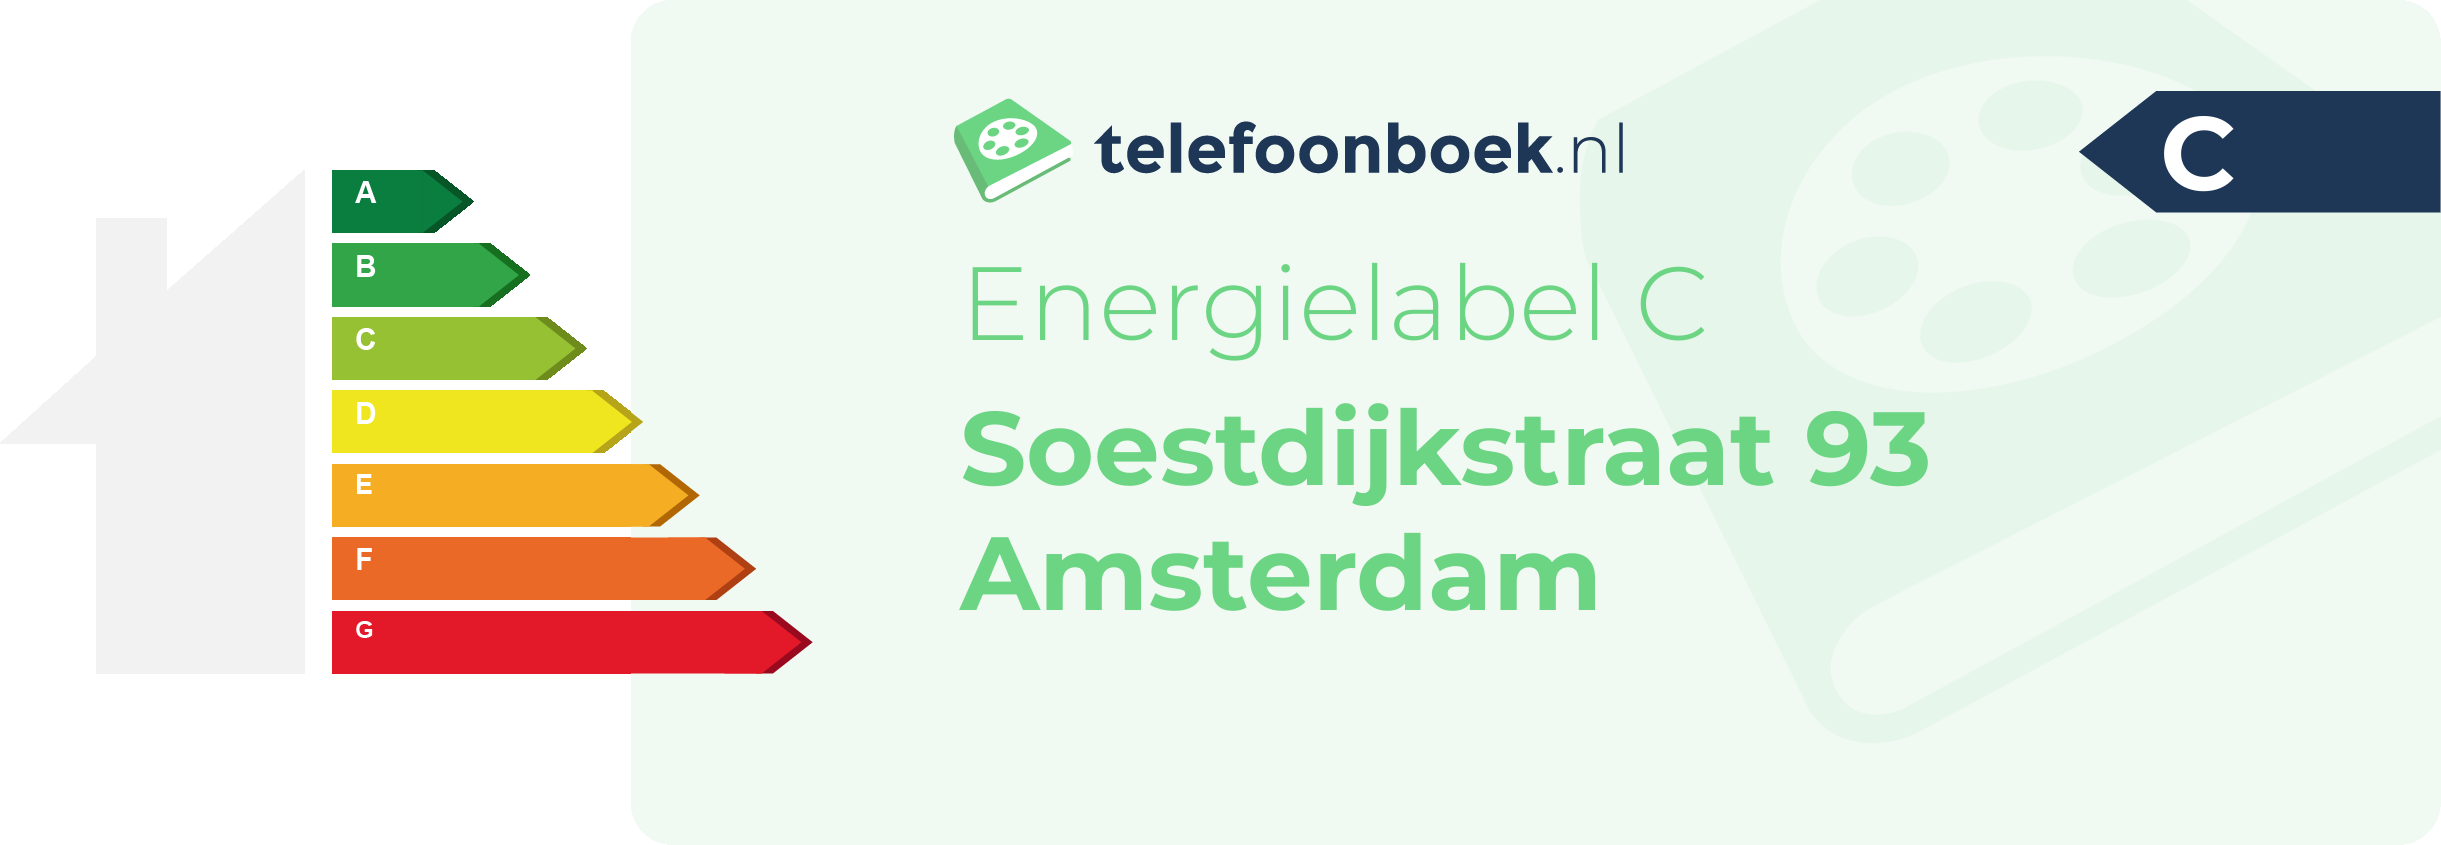 Energielabel Soestdijkstraat 93 Amsterdam